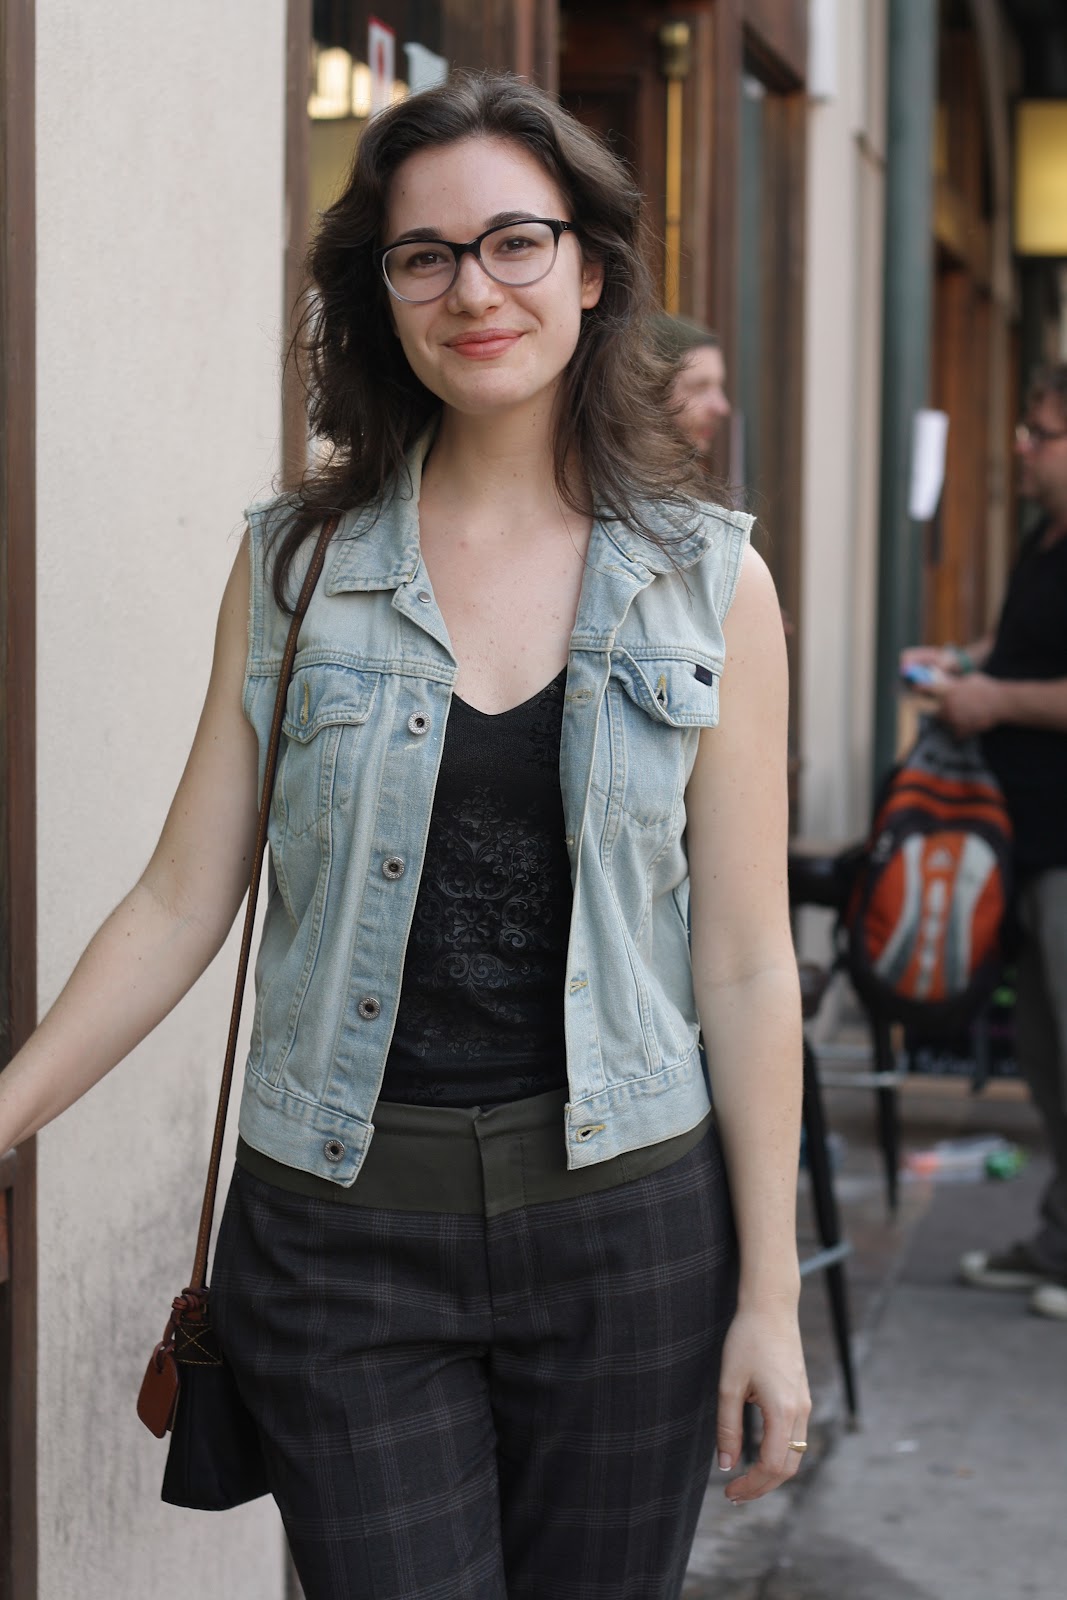 brunette girl wearing a denim vest, black tank, and glasses